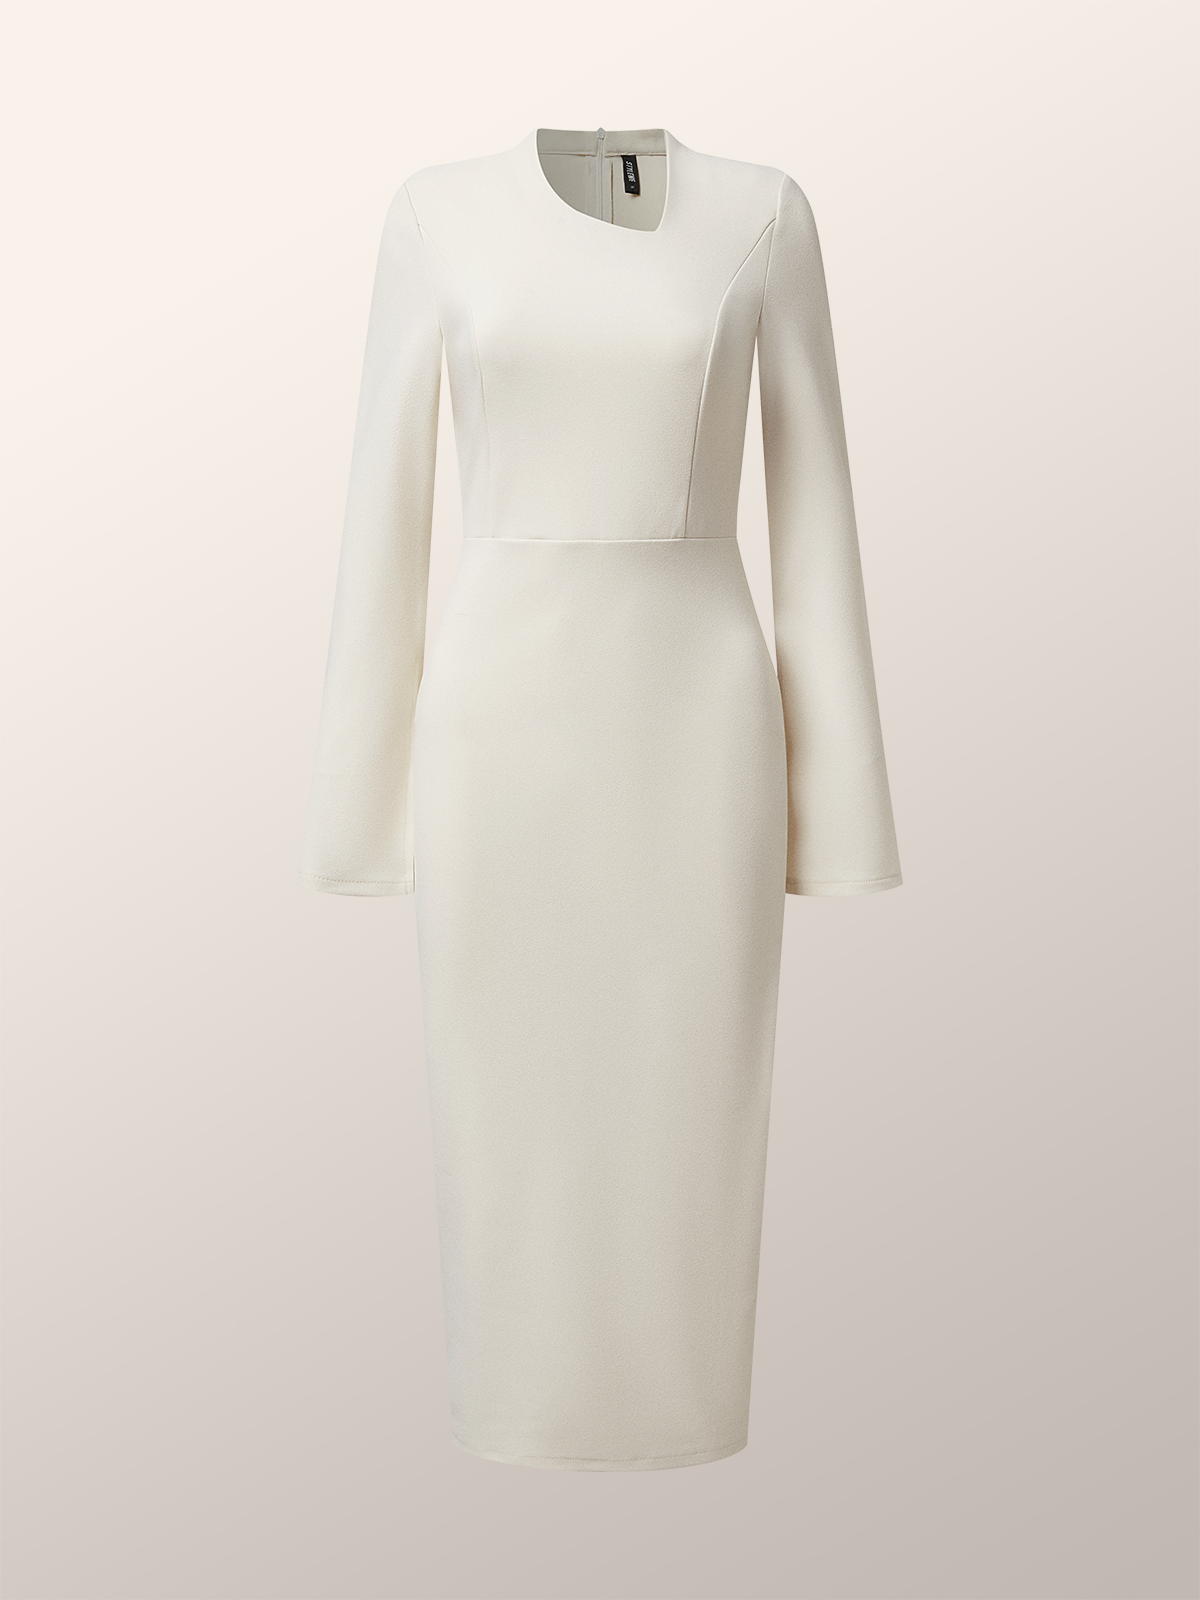 Long Sleeve Tight V Neck Plain Elegant Dress